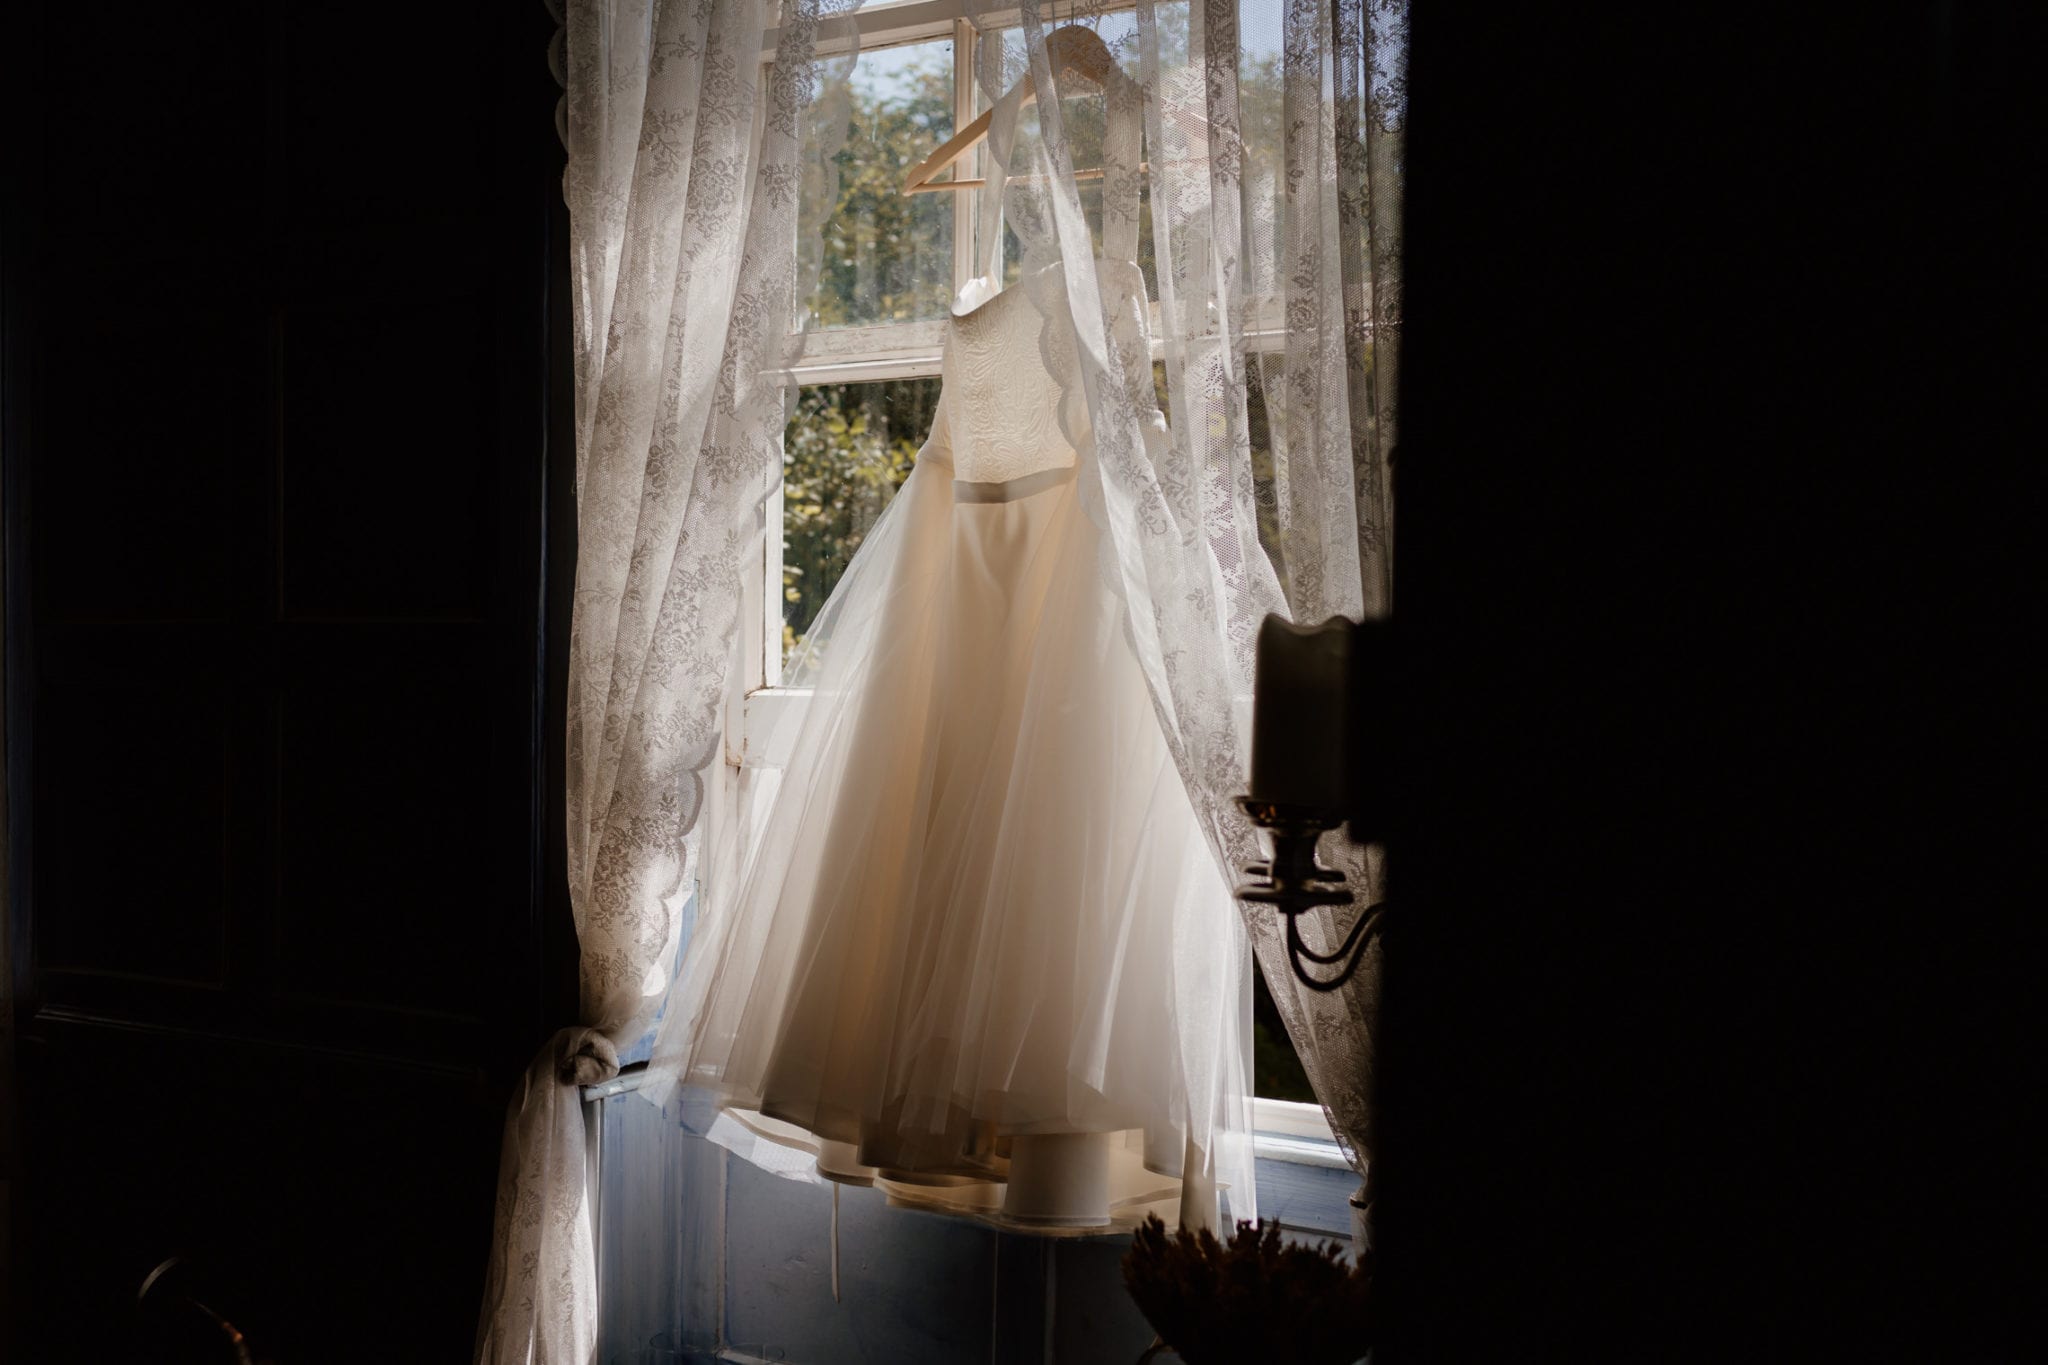 Pretty dress hanging from window